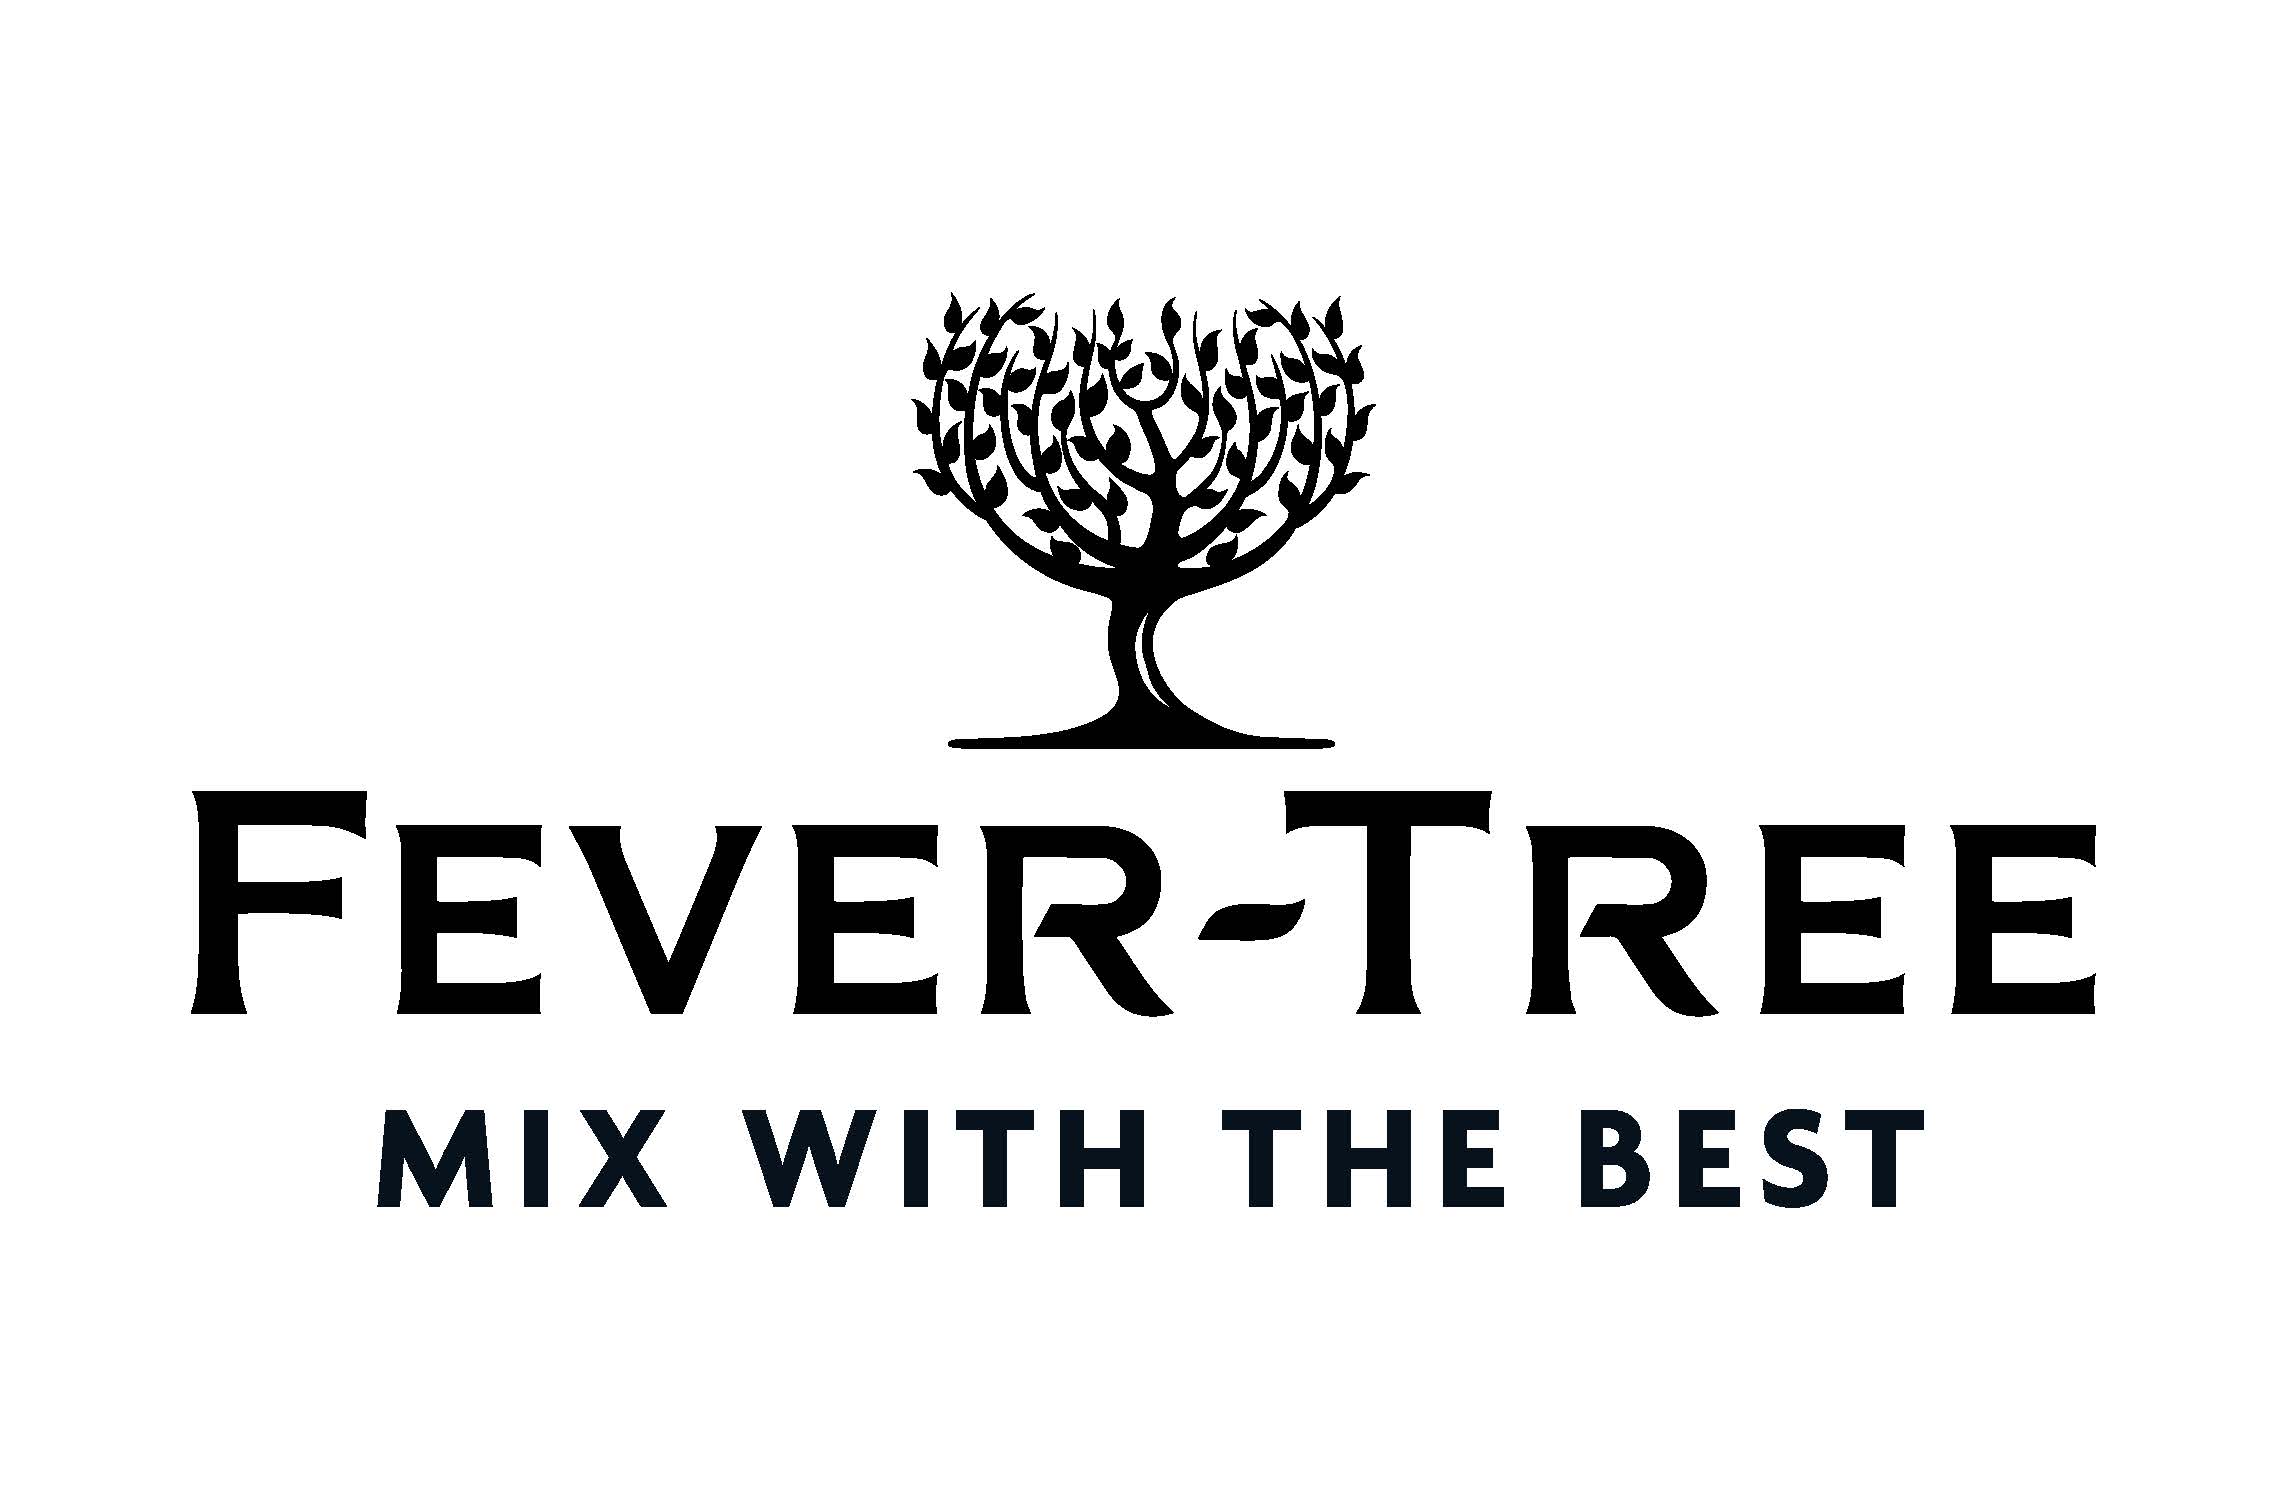 Fever Tree